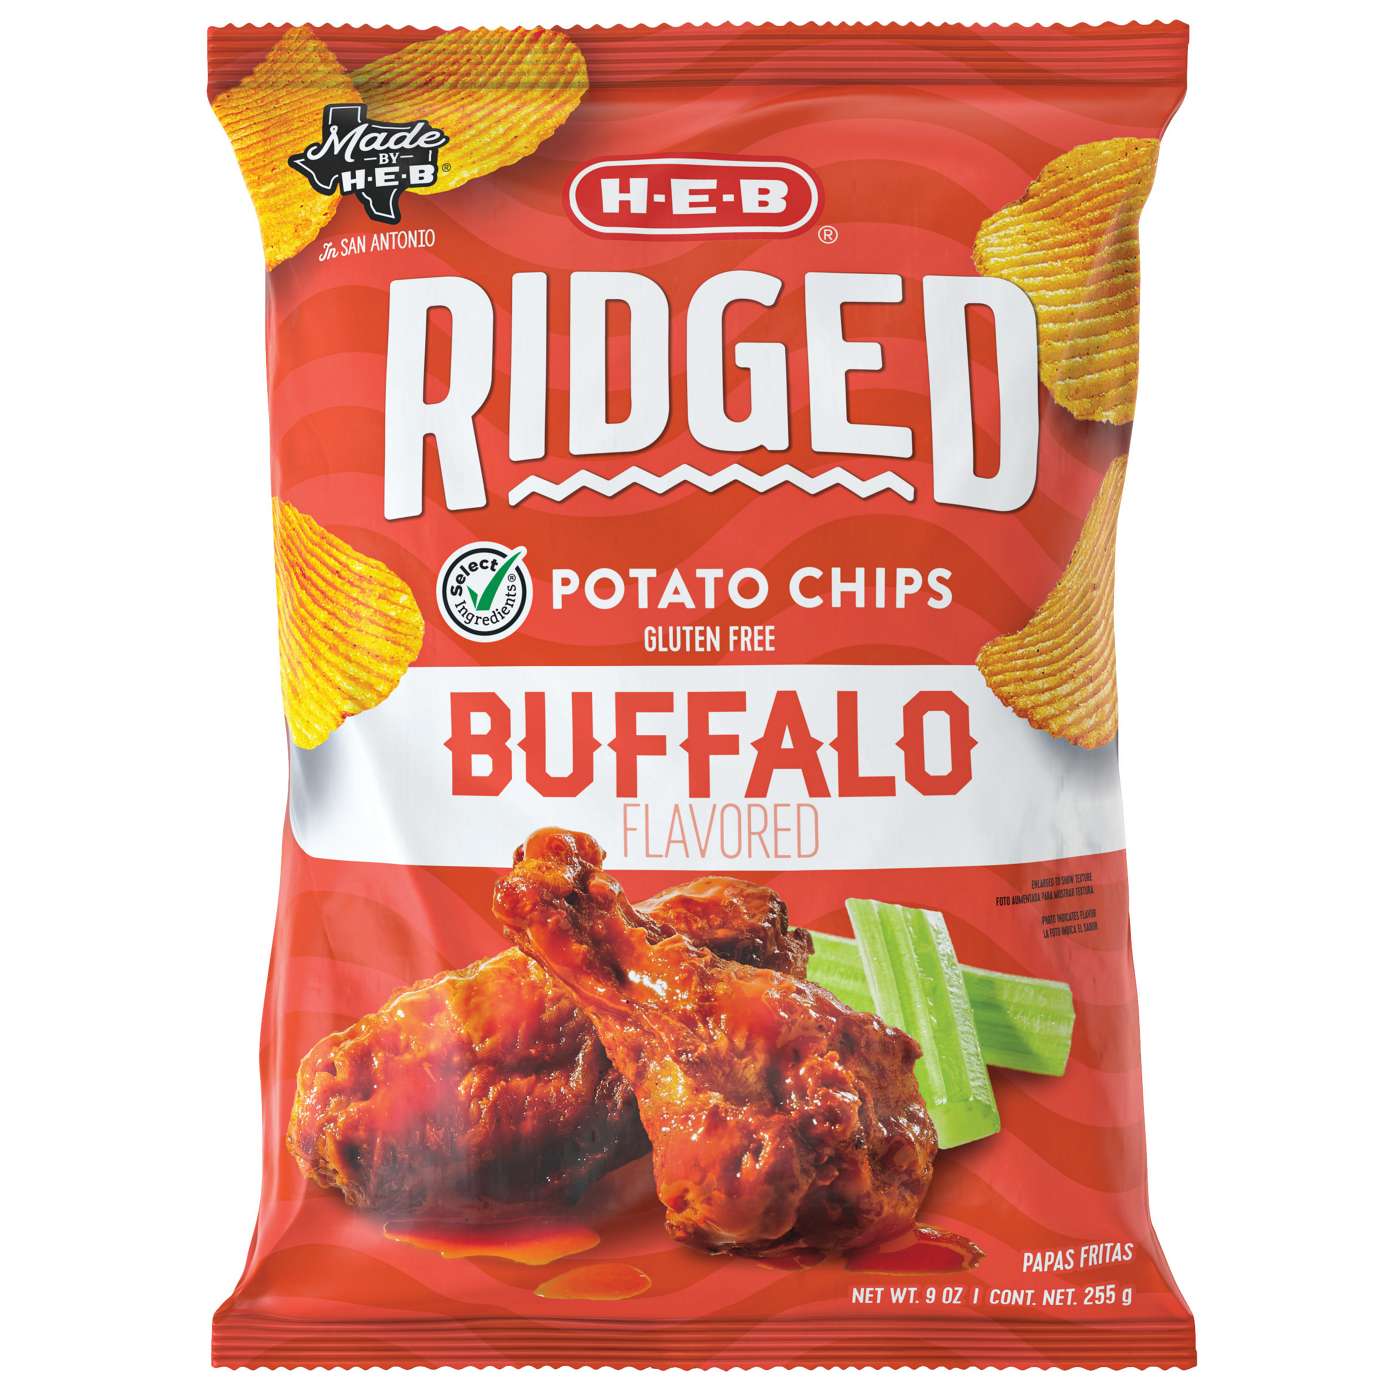 H-E-B Ridged Potato Chips - Buffalo Flavored; image 1 of 3